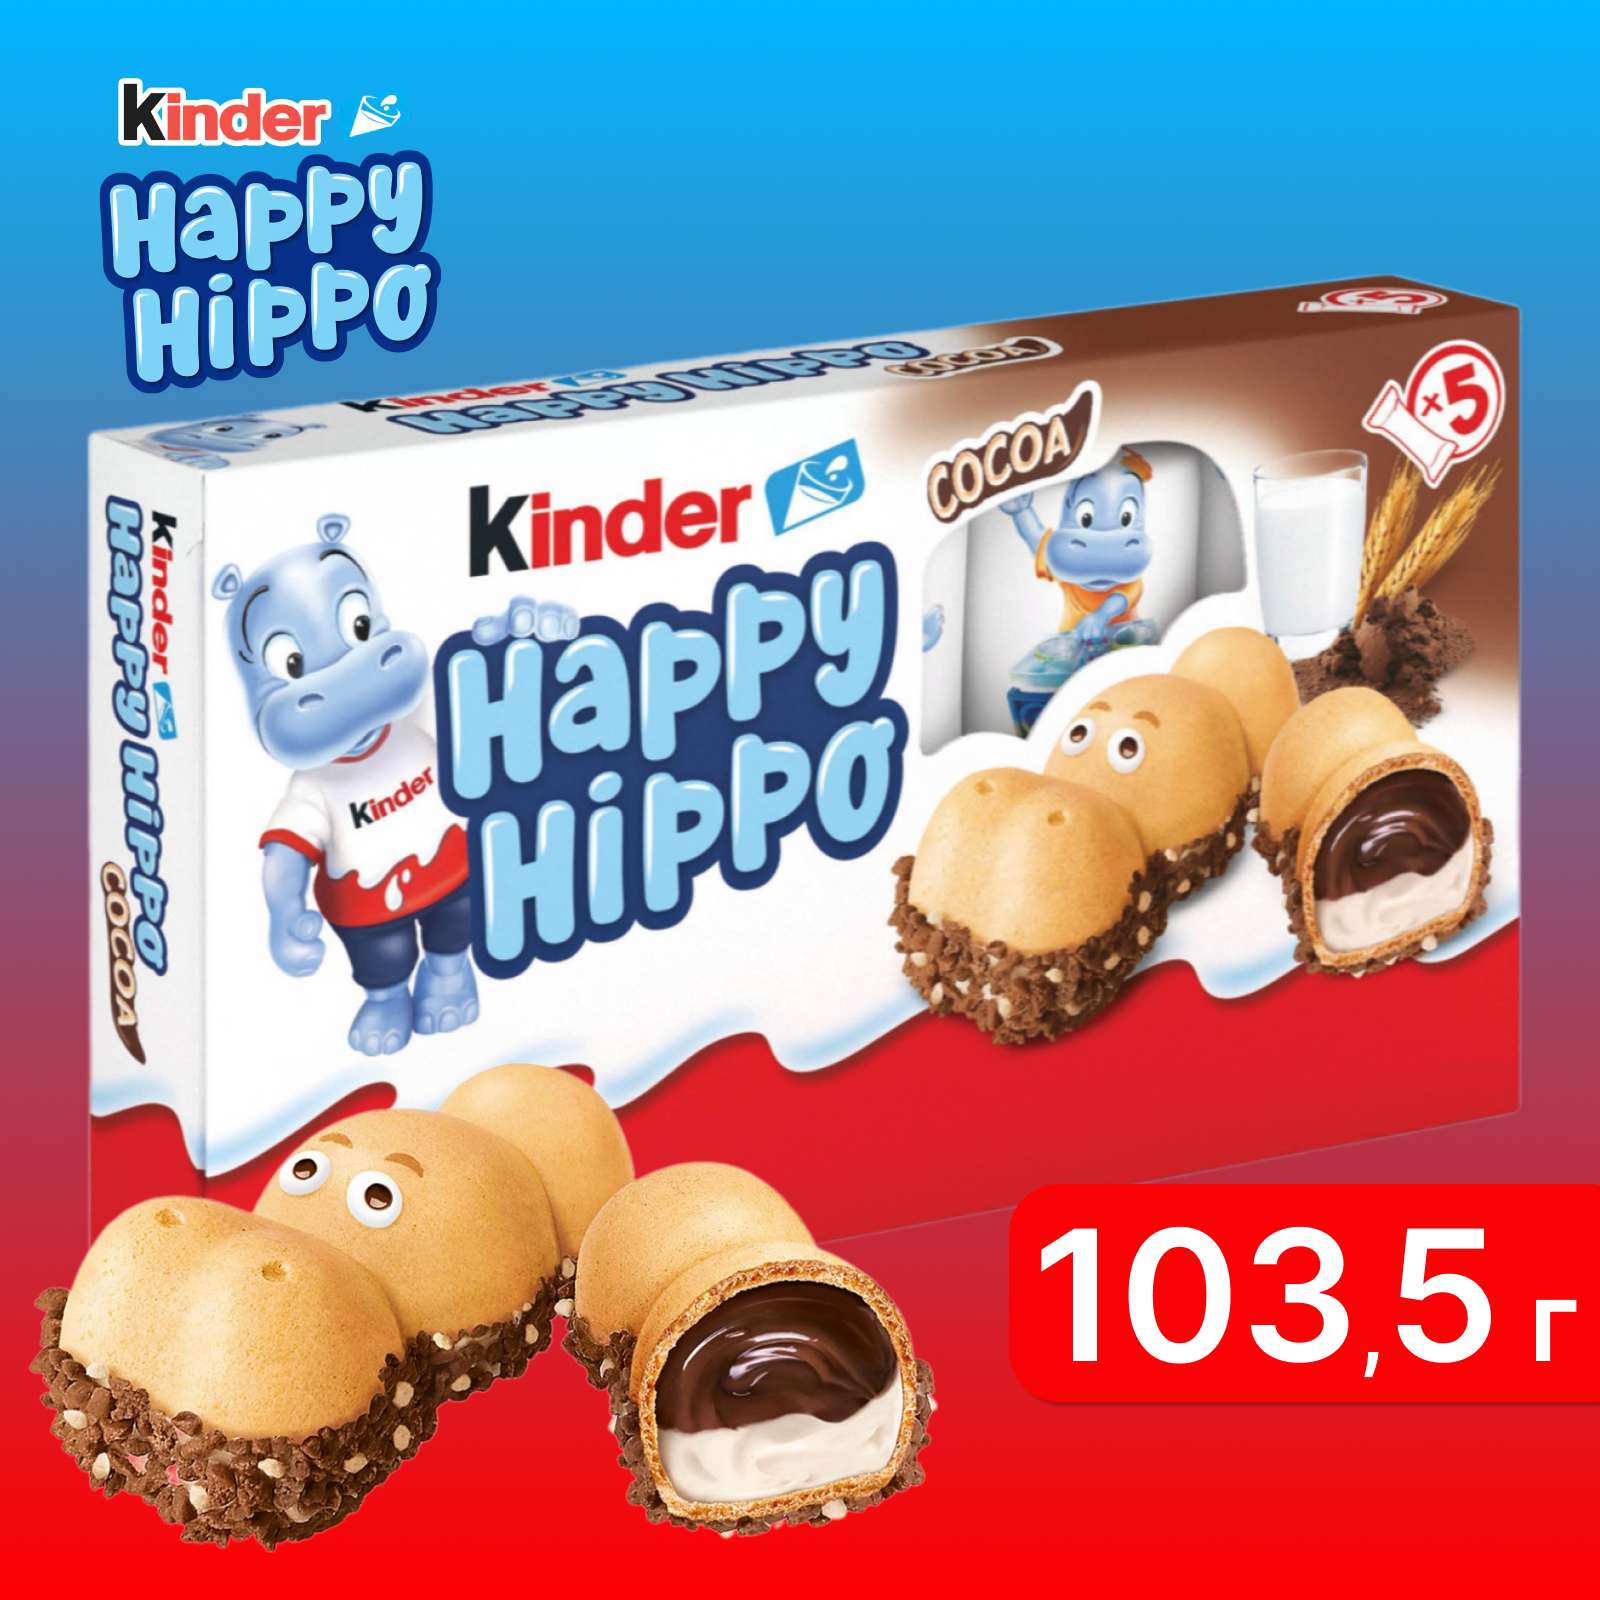 Батончик Kinder Happy Hippo, Киндер Хеппи Хиппо с Какао, 103,5 г